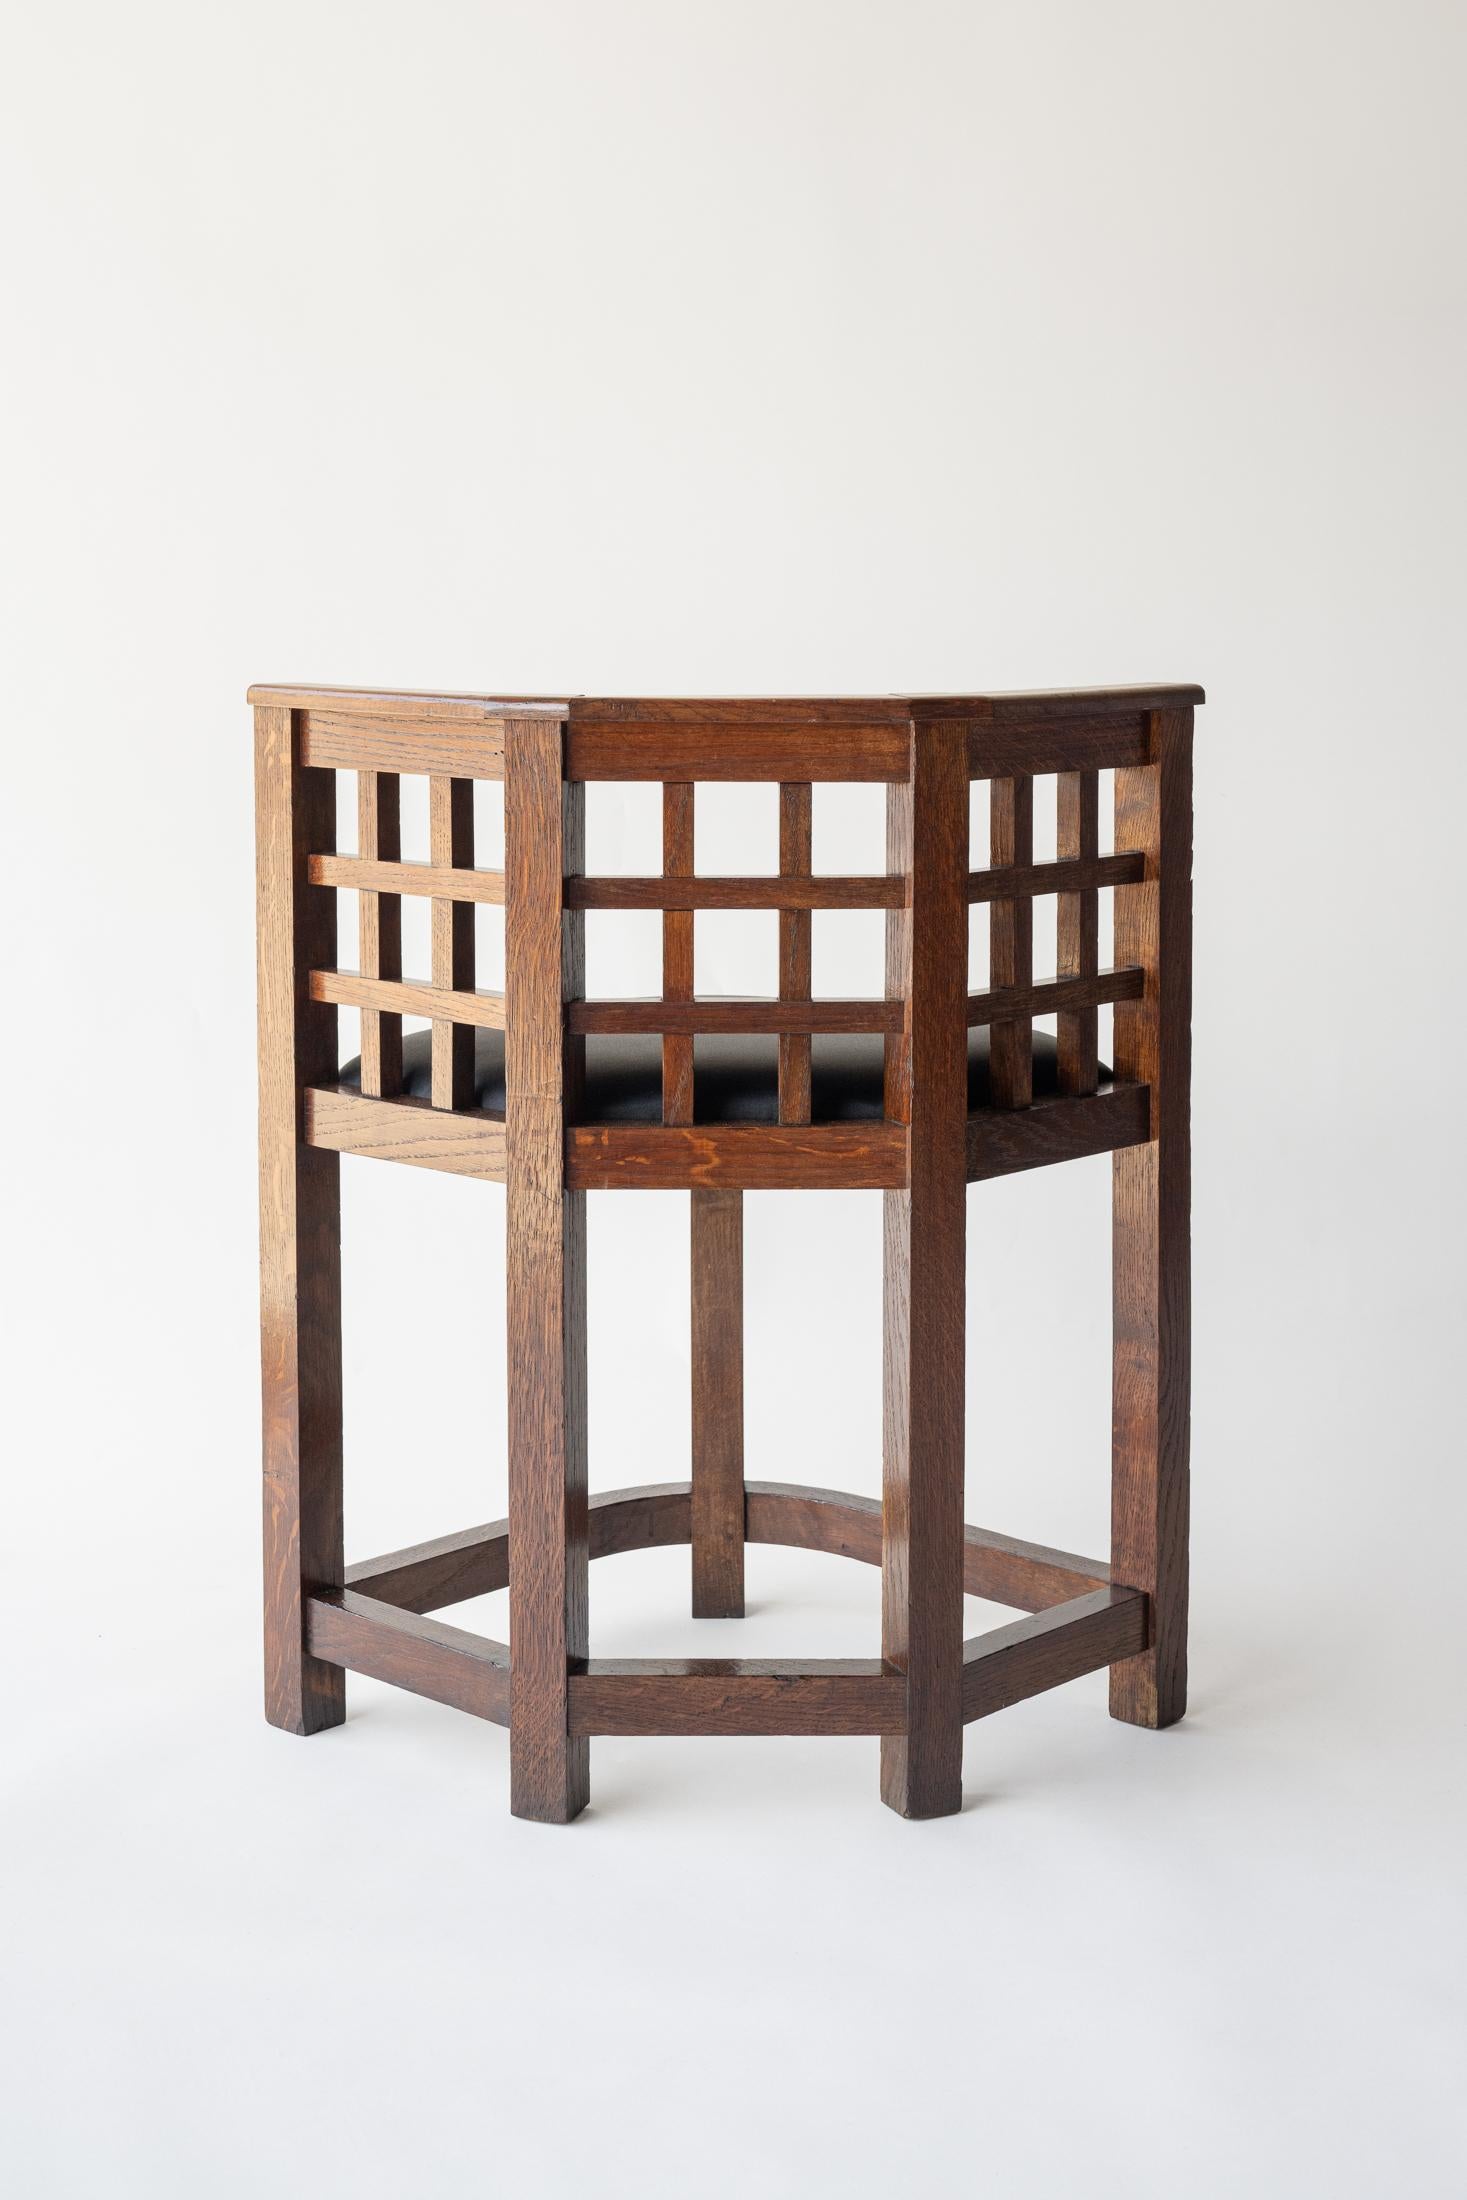 Art Deco Game Table Chair by Francis Jourdain, c. 1920